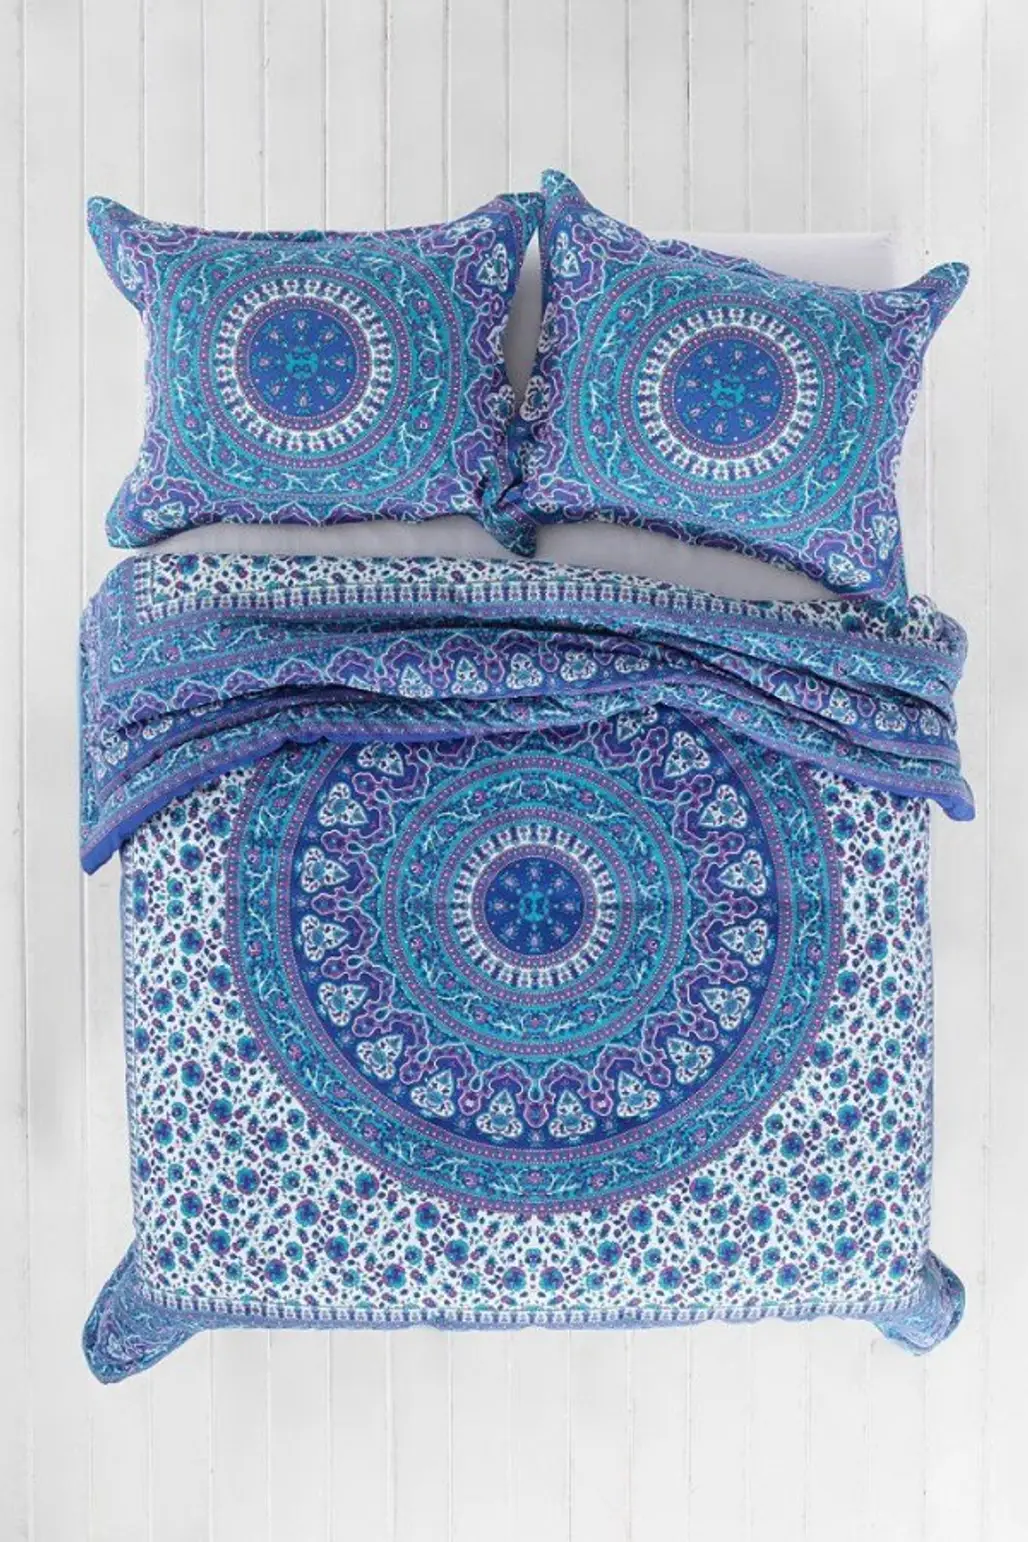 blue,furniture,art,bed sheet,pattern,